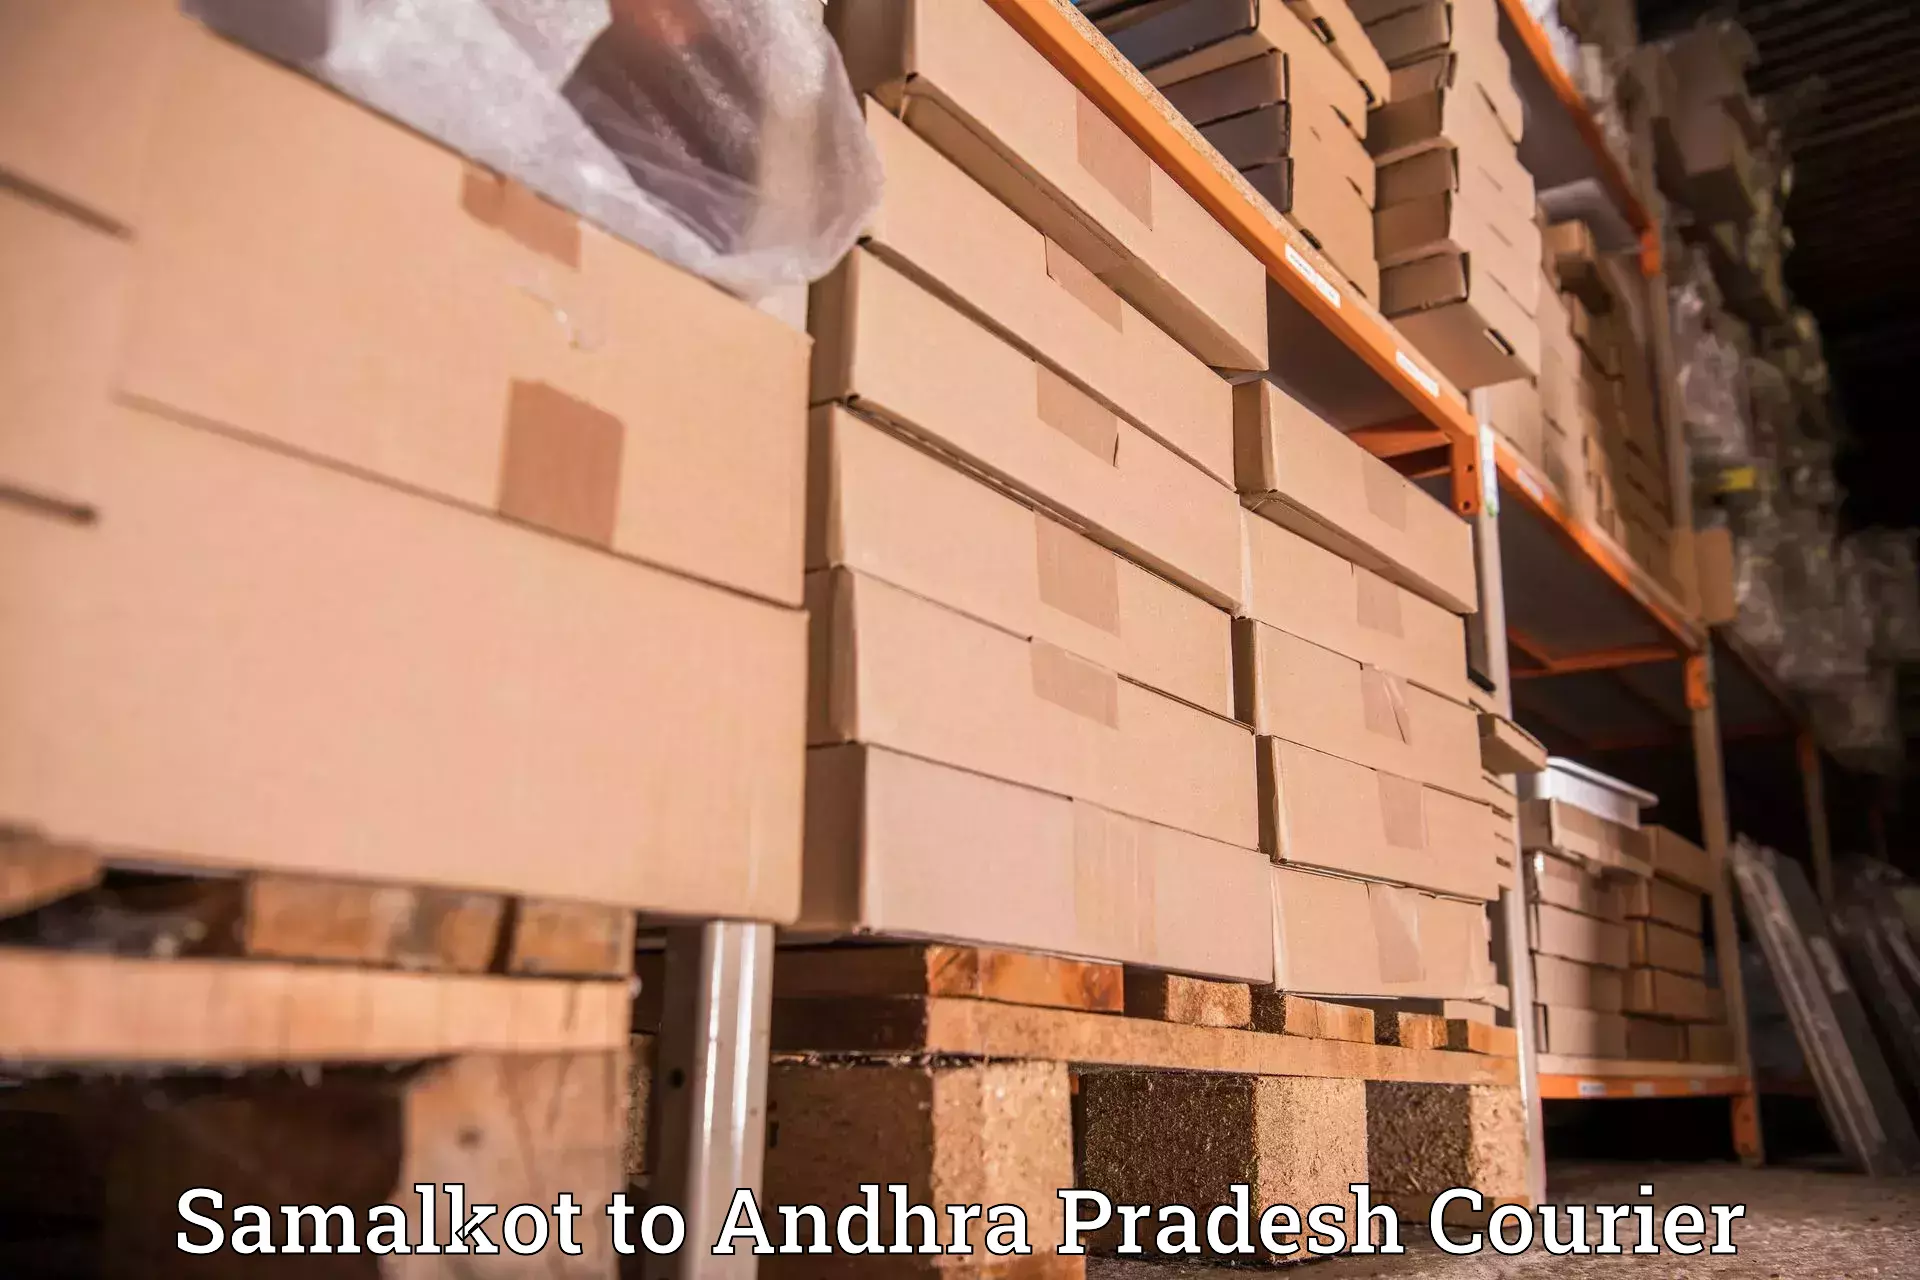 Courier service comparison Samalkot to Andhra Pradesh